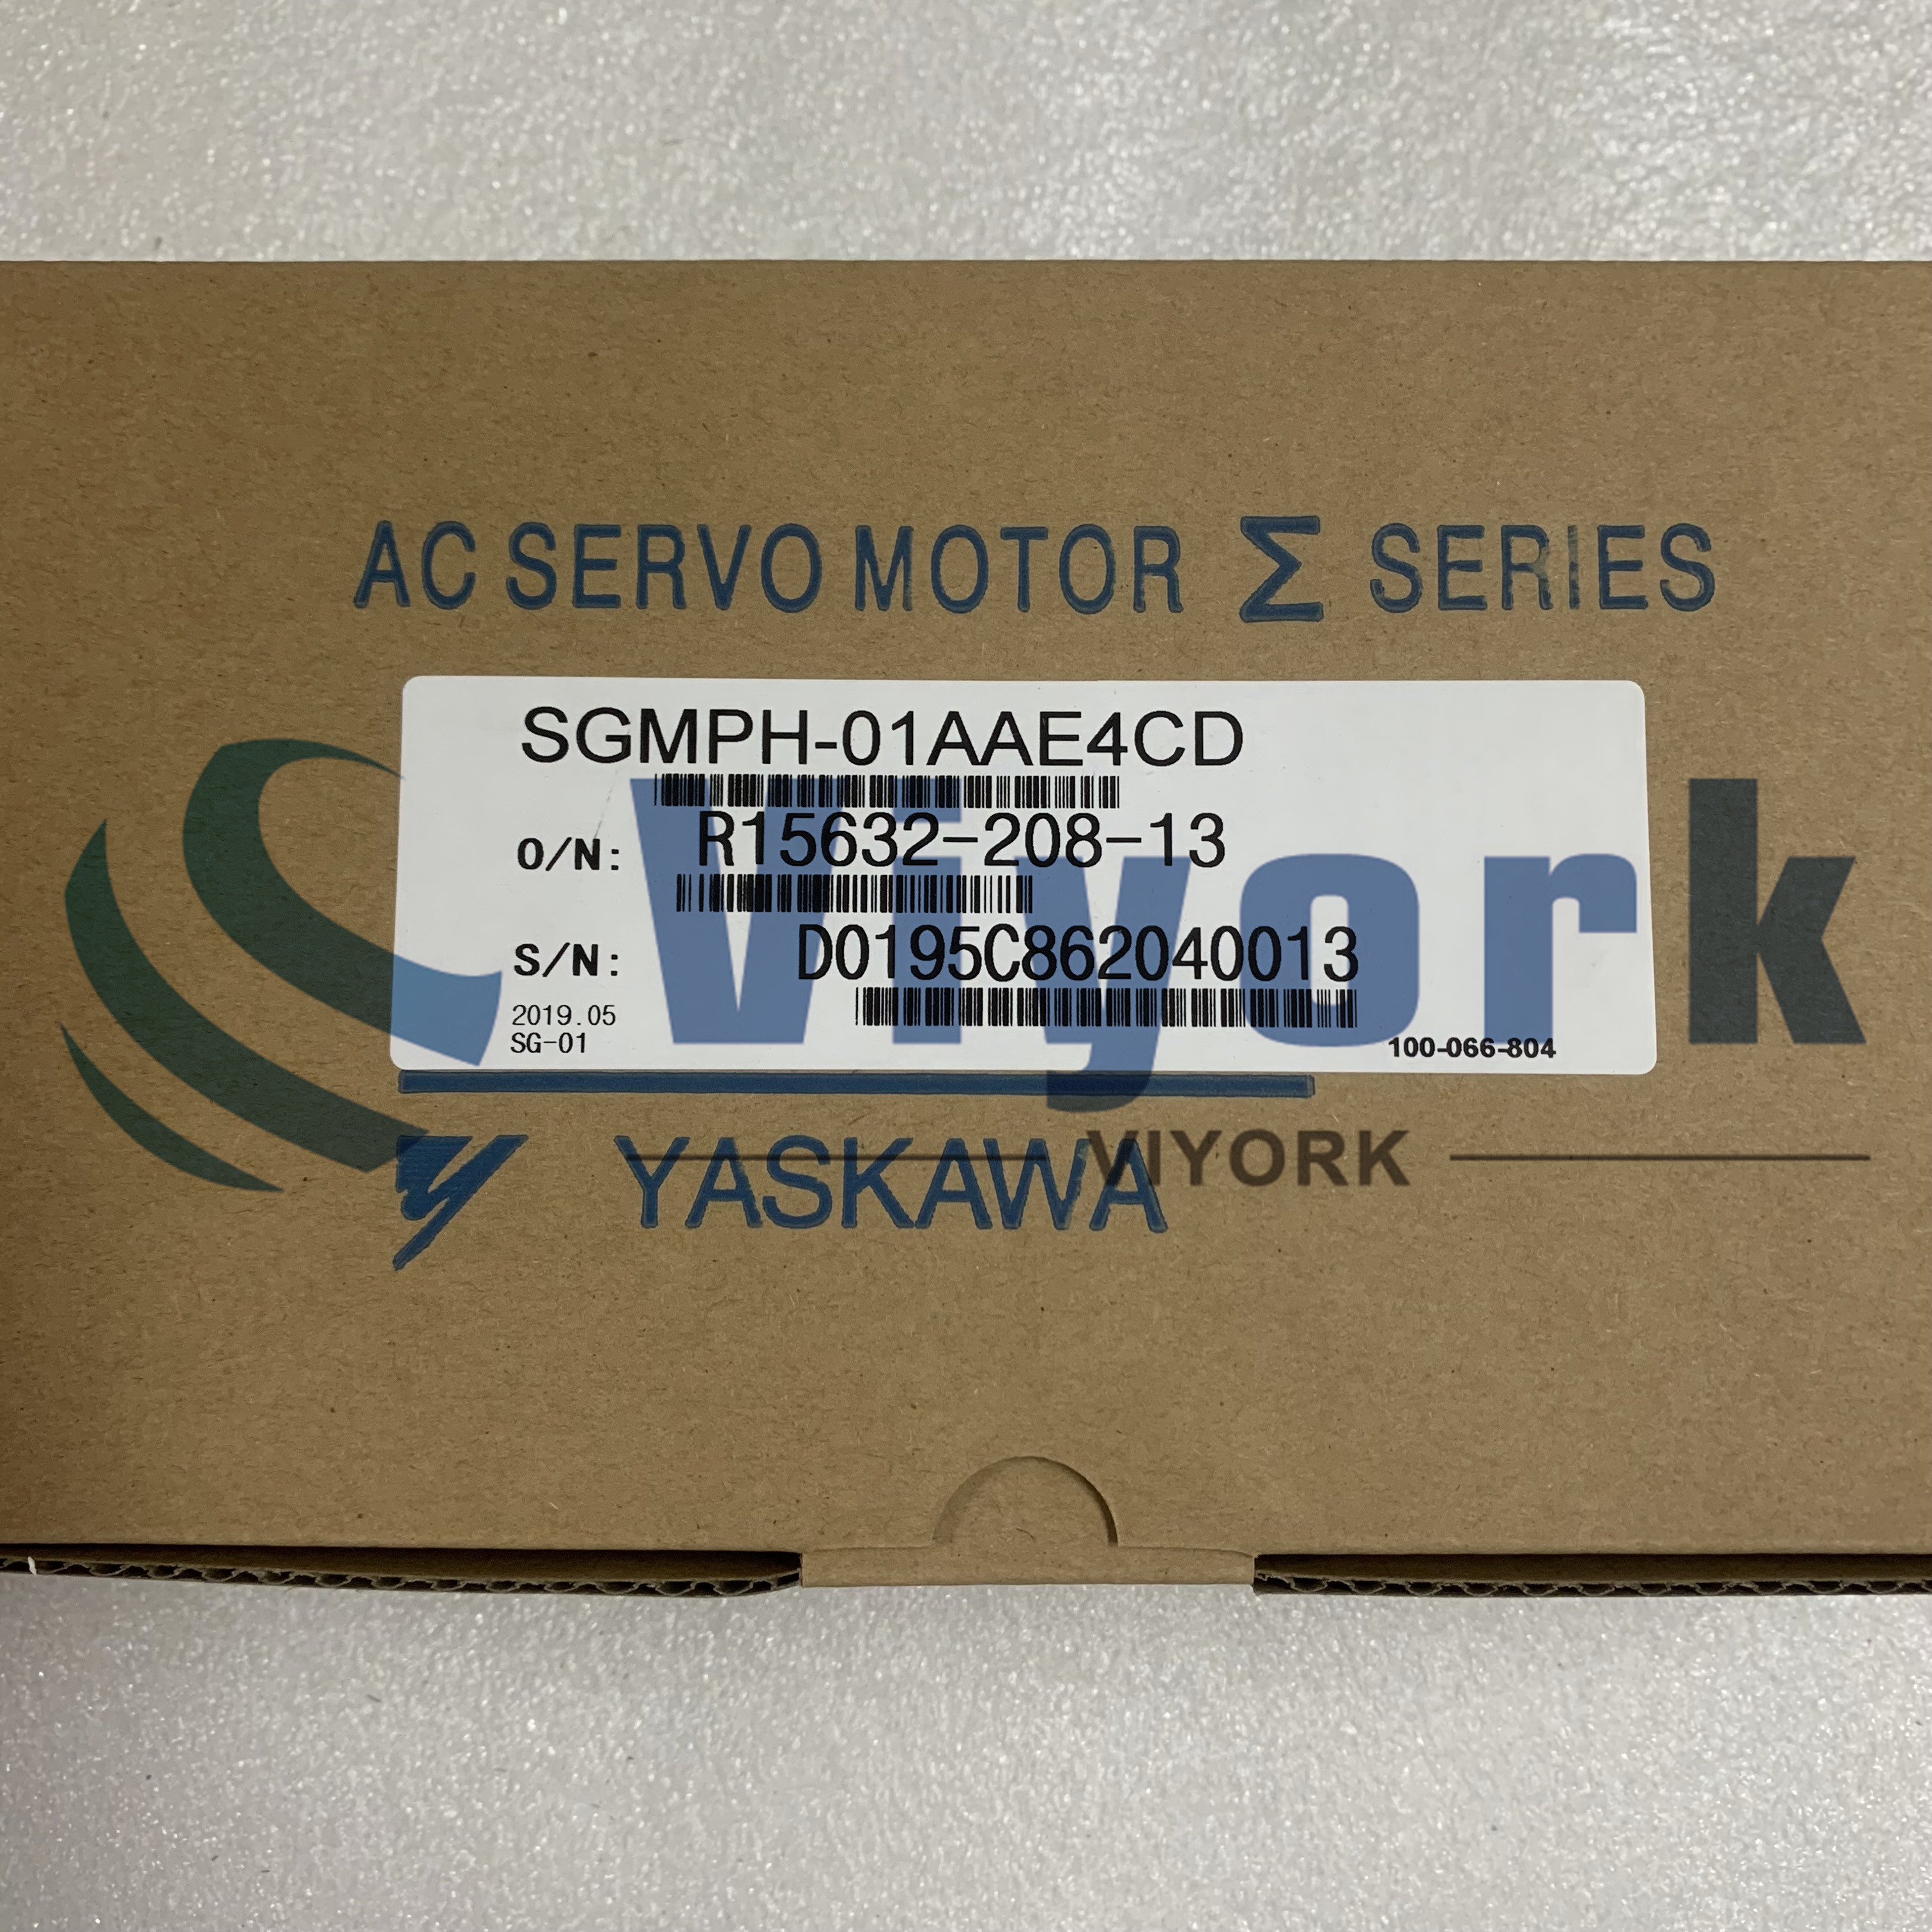 Yaskawa SGMPH-01AAE4CD AC SERVO MOTOR 300RPM 200V 100W NEW